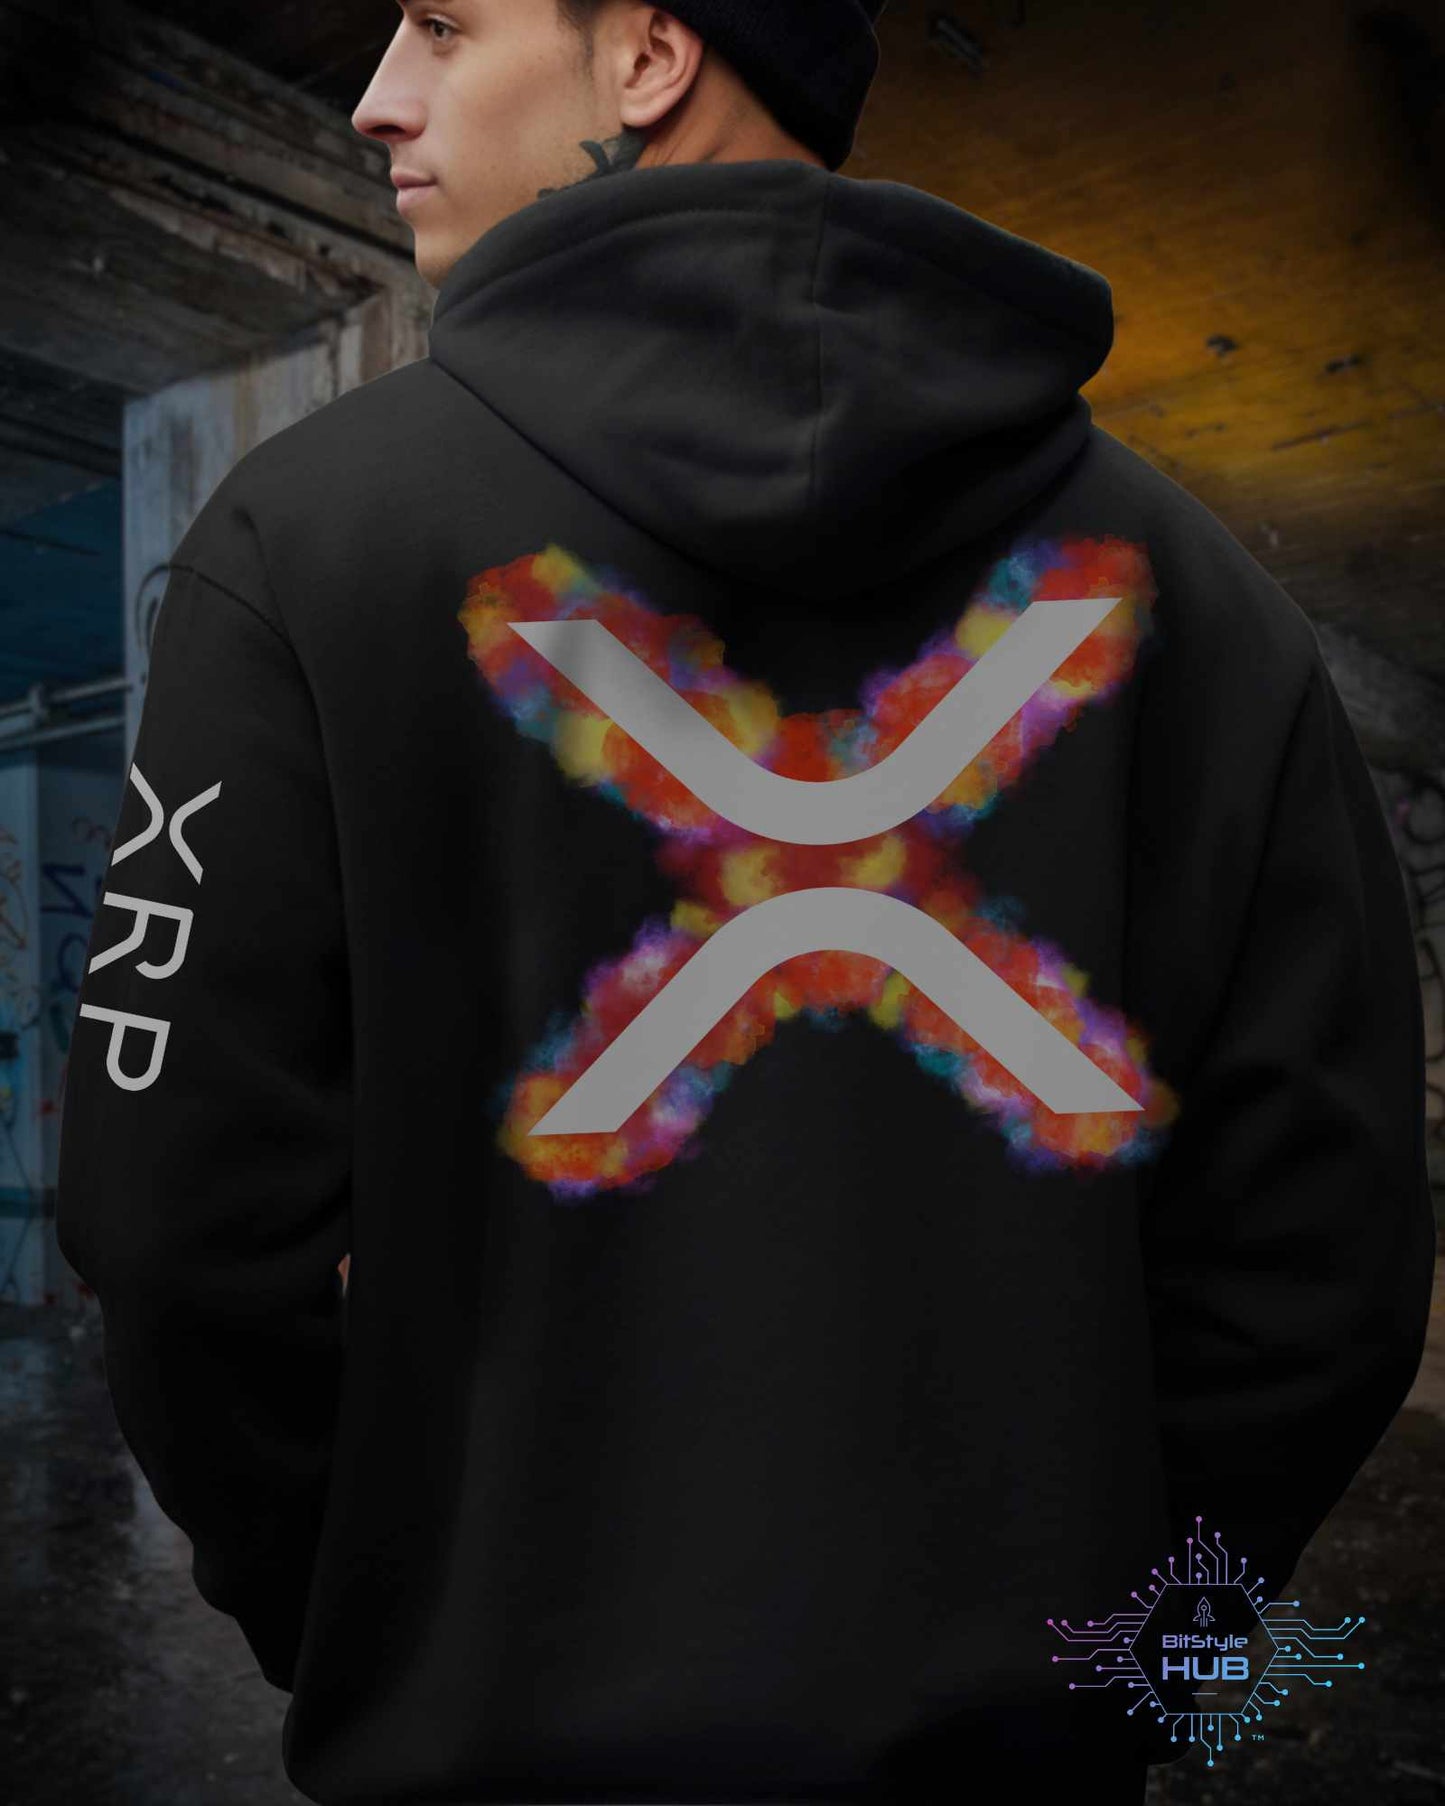 XRP 'Phoenix Rising X' Hooded Sweatshirt - Unisex Crypto Apparel